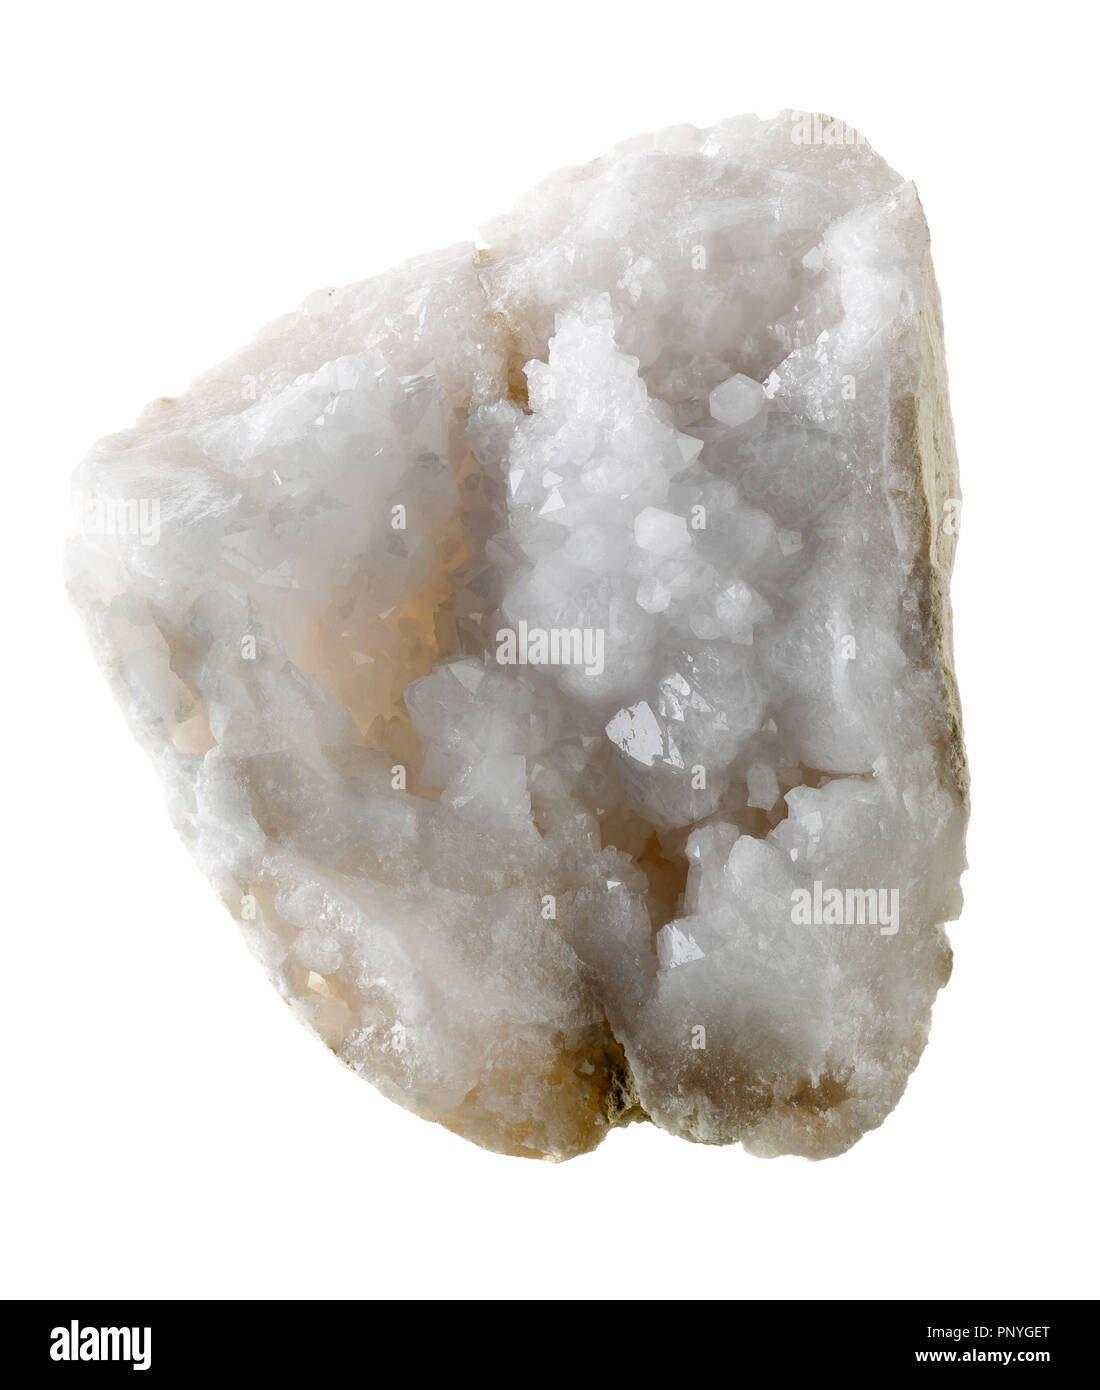 Quarzo bianco geode cristalli dal Marocco isolati su sfondo bianco Foto  stock - Alamy